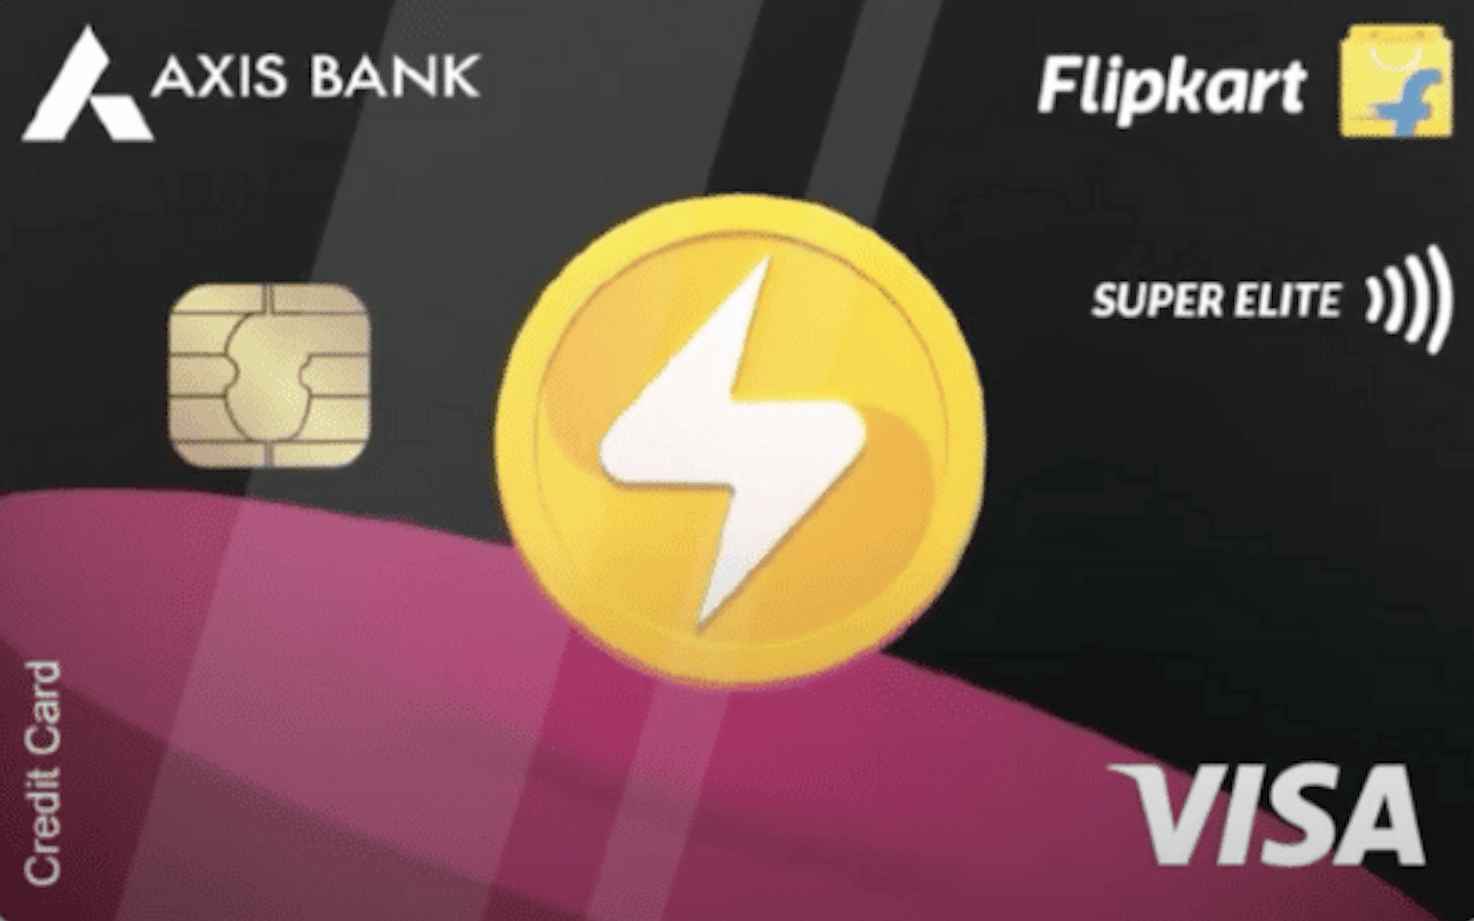 Flipkart Super Elite Credit Card - Eligibility Criteria, Benefits & More 